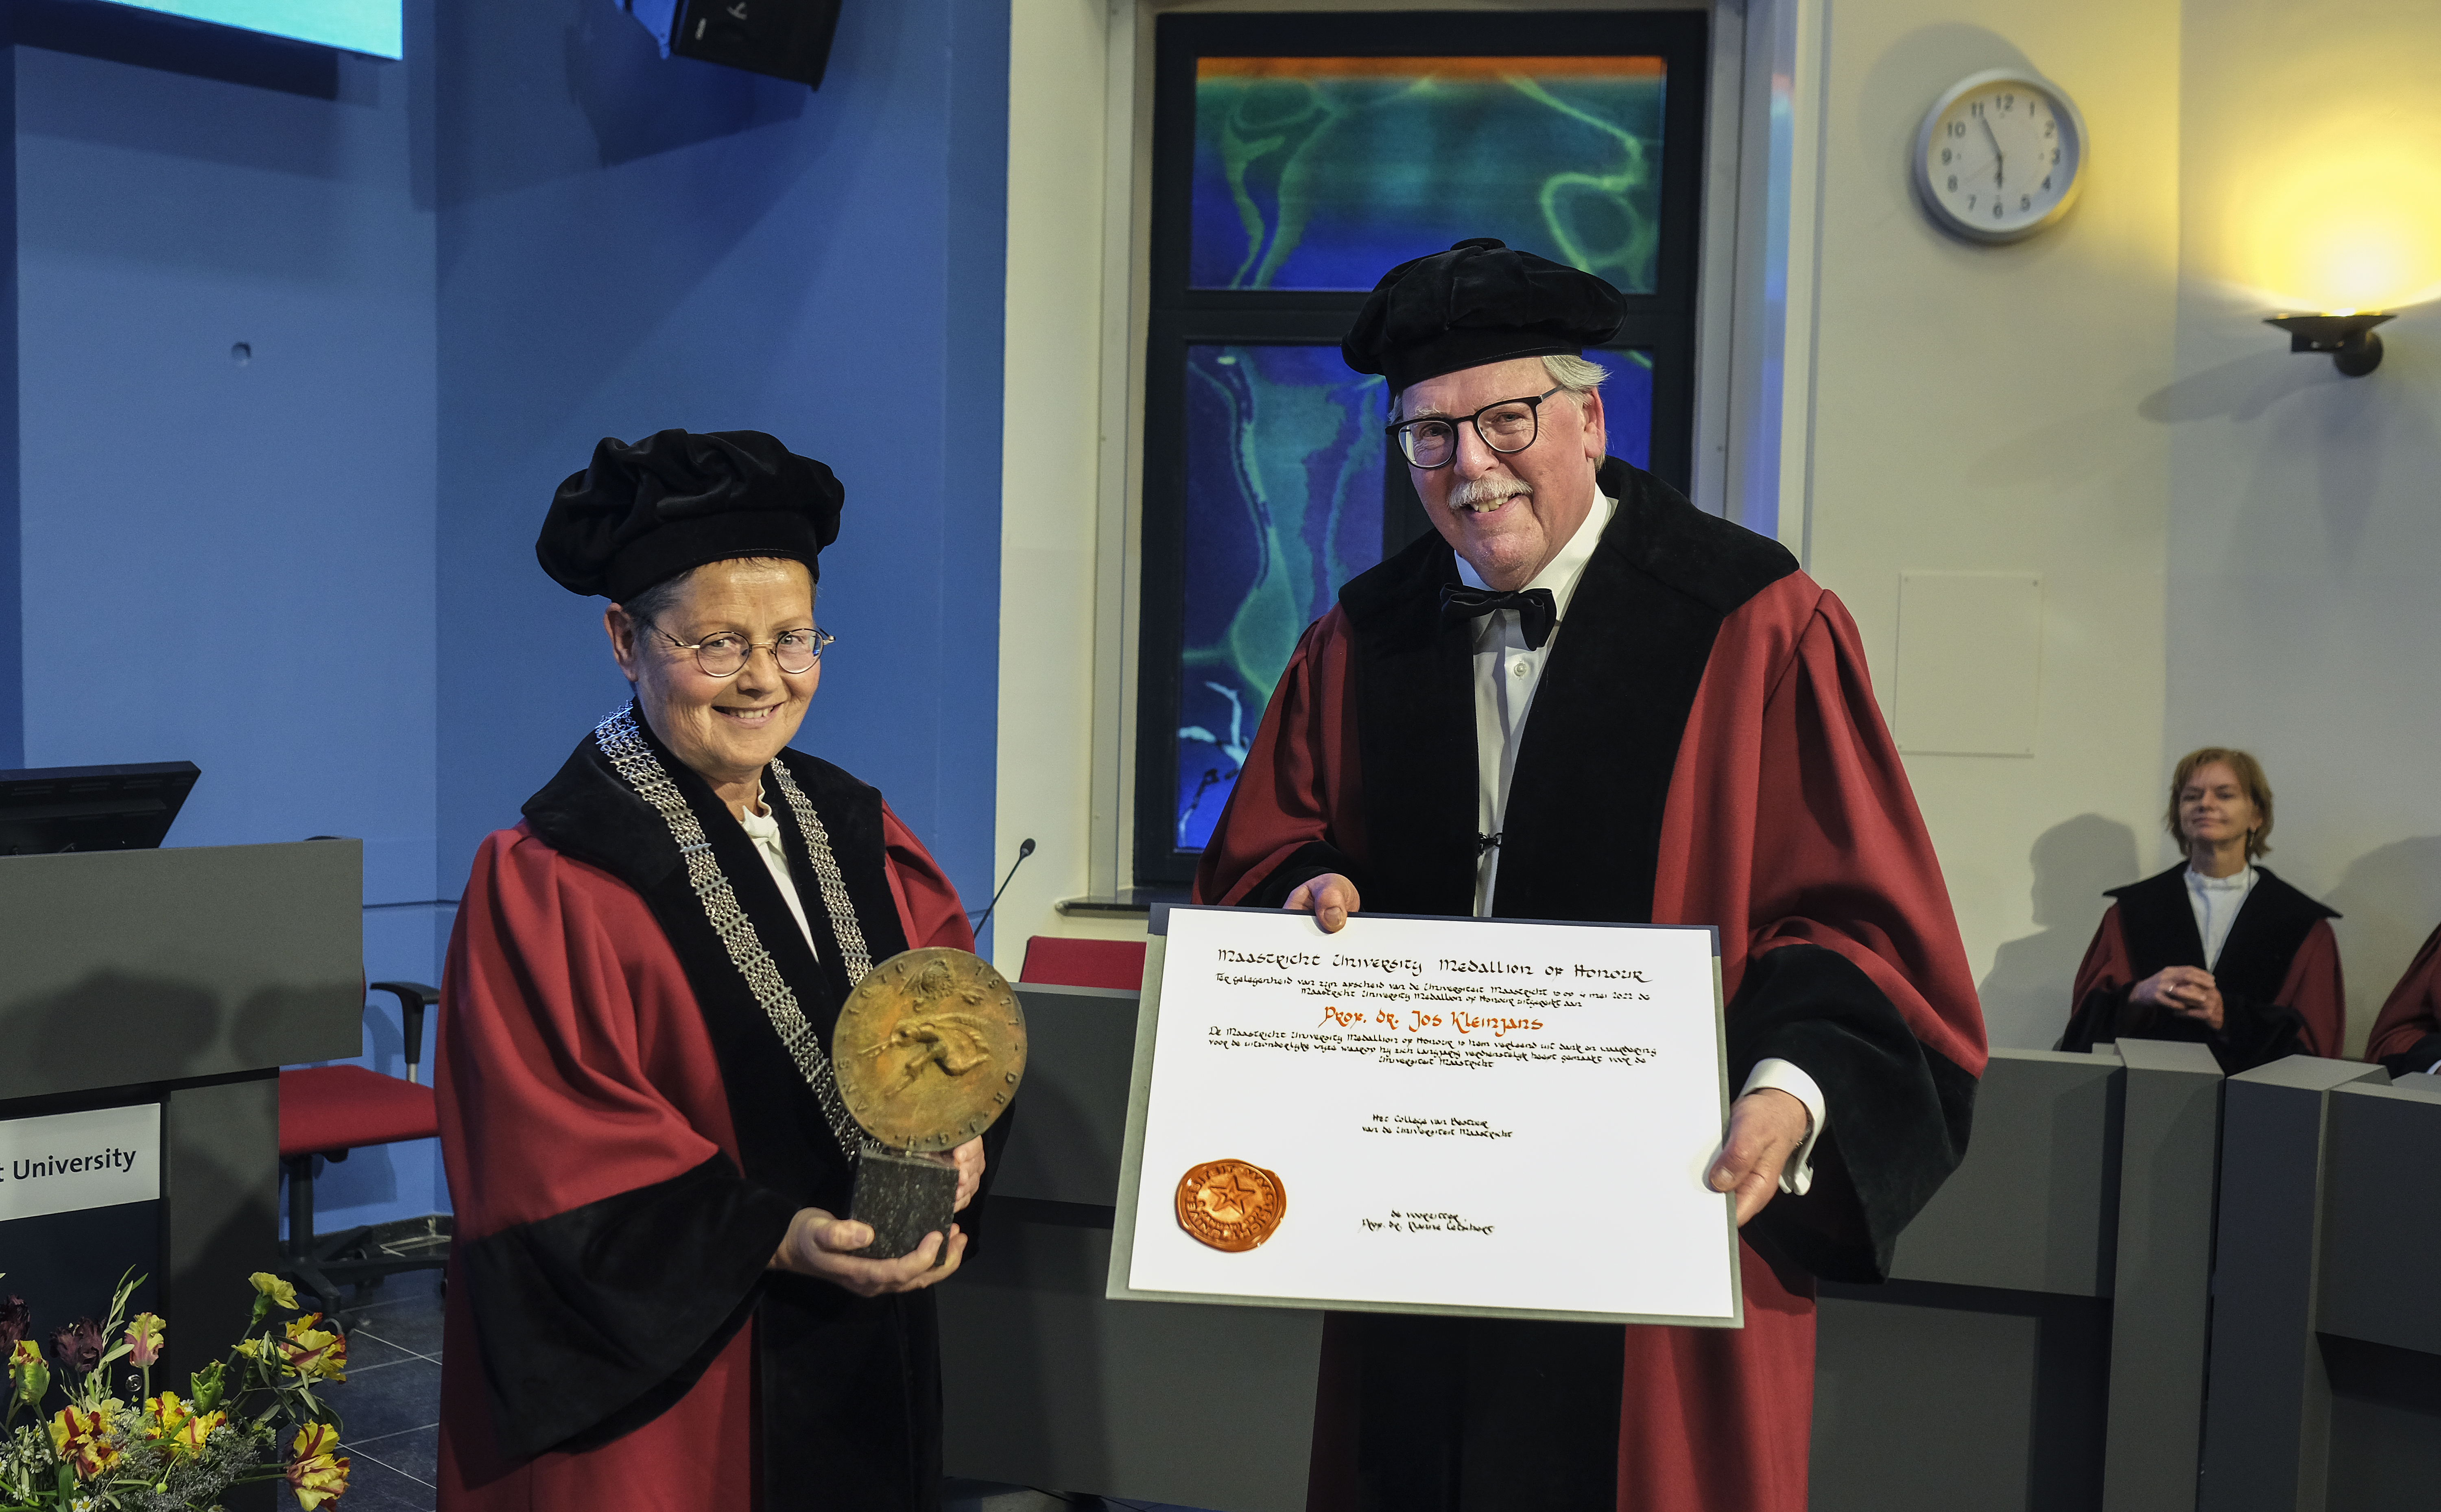 Jos Kleinjans receives the Medallion of Honour